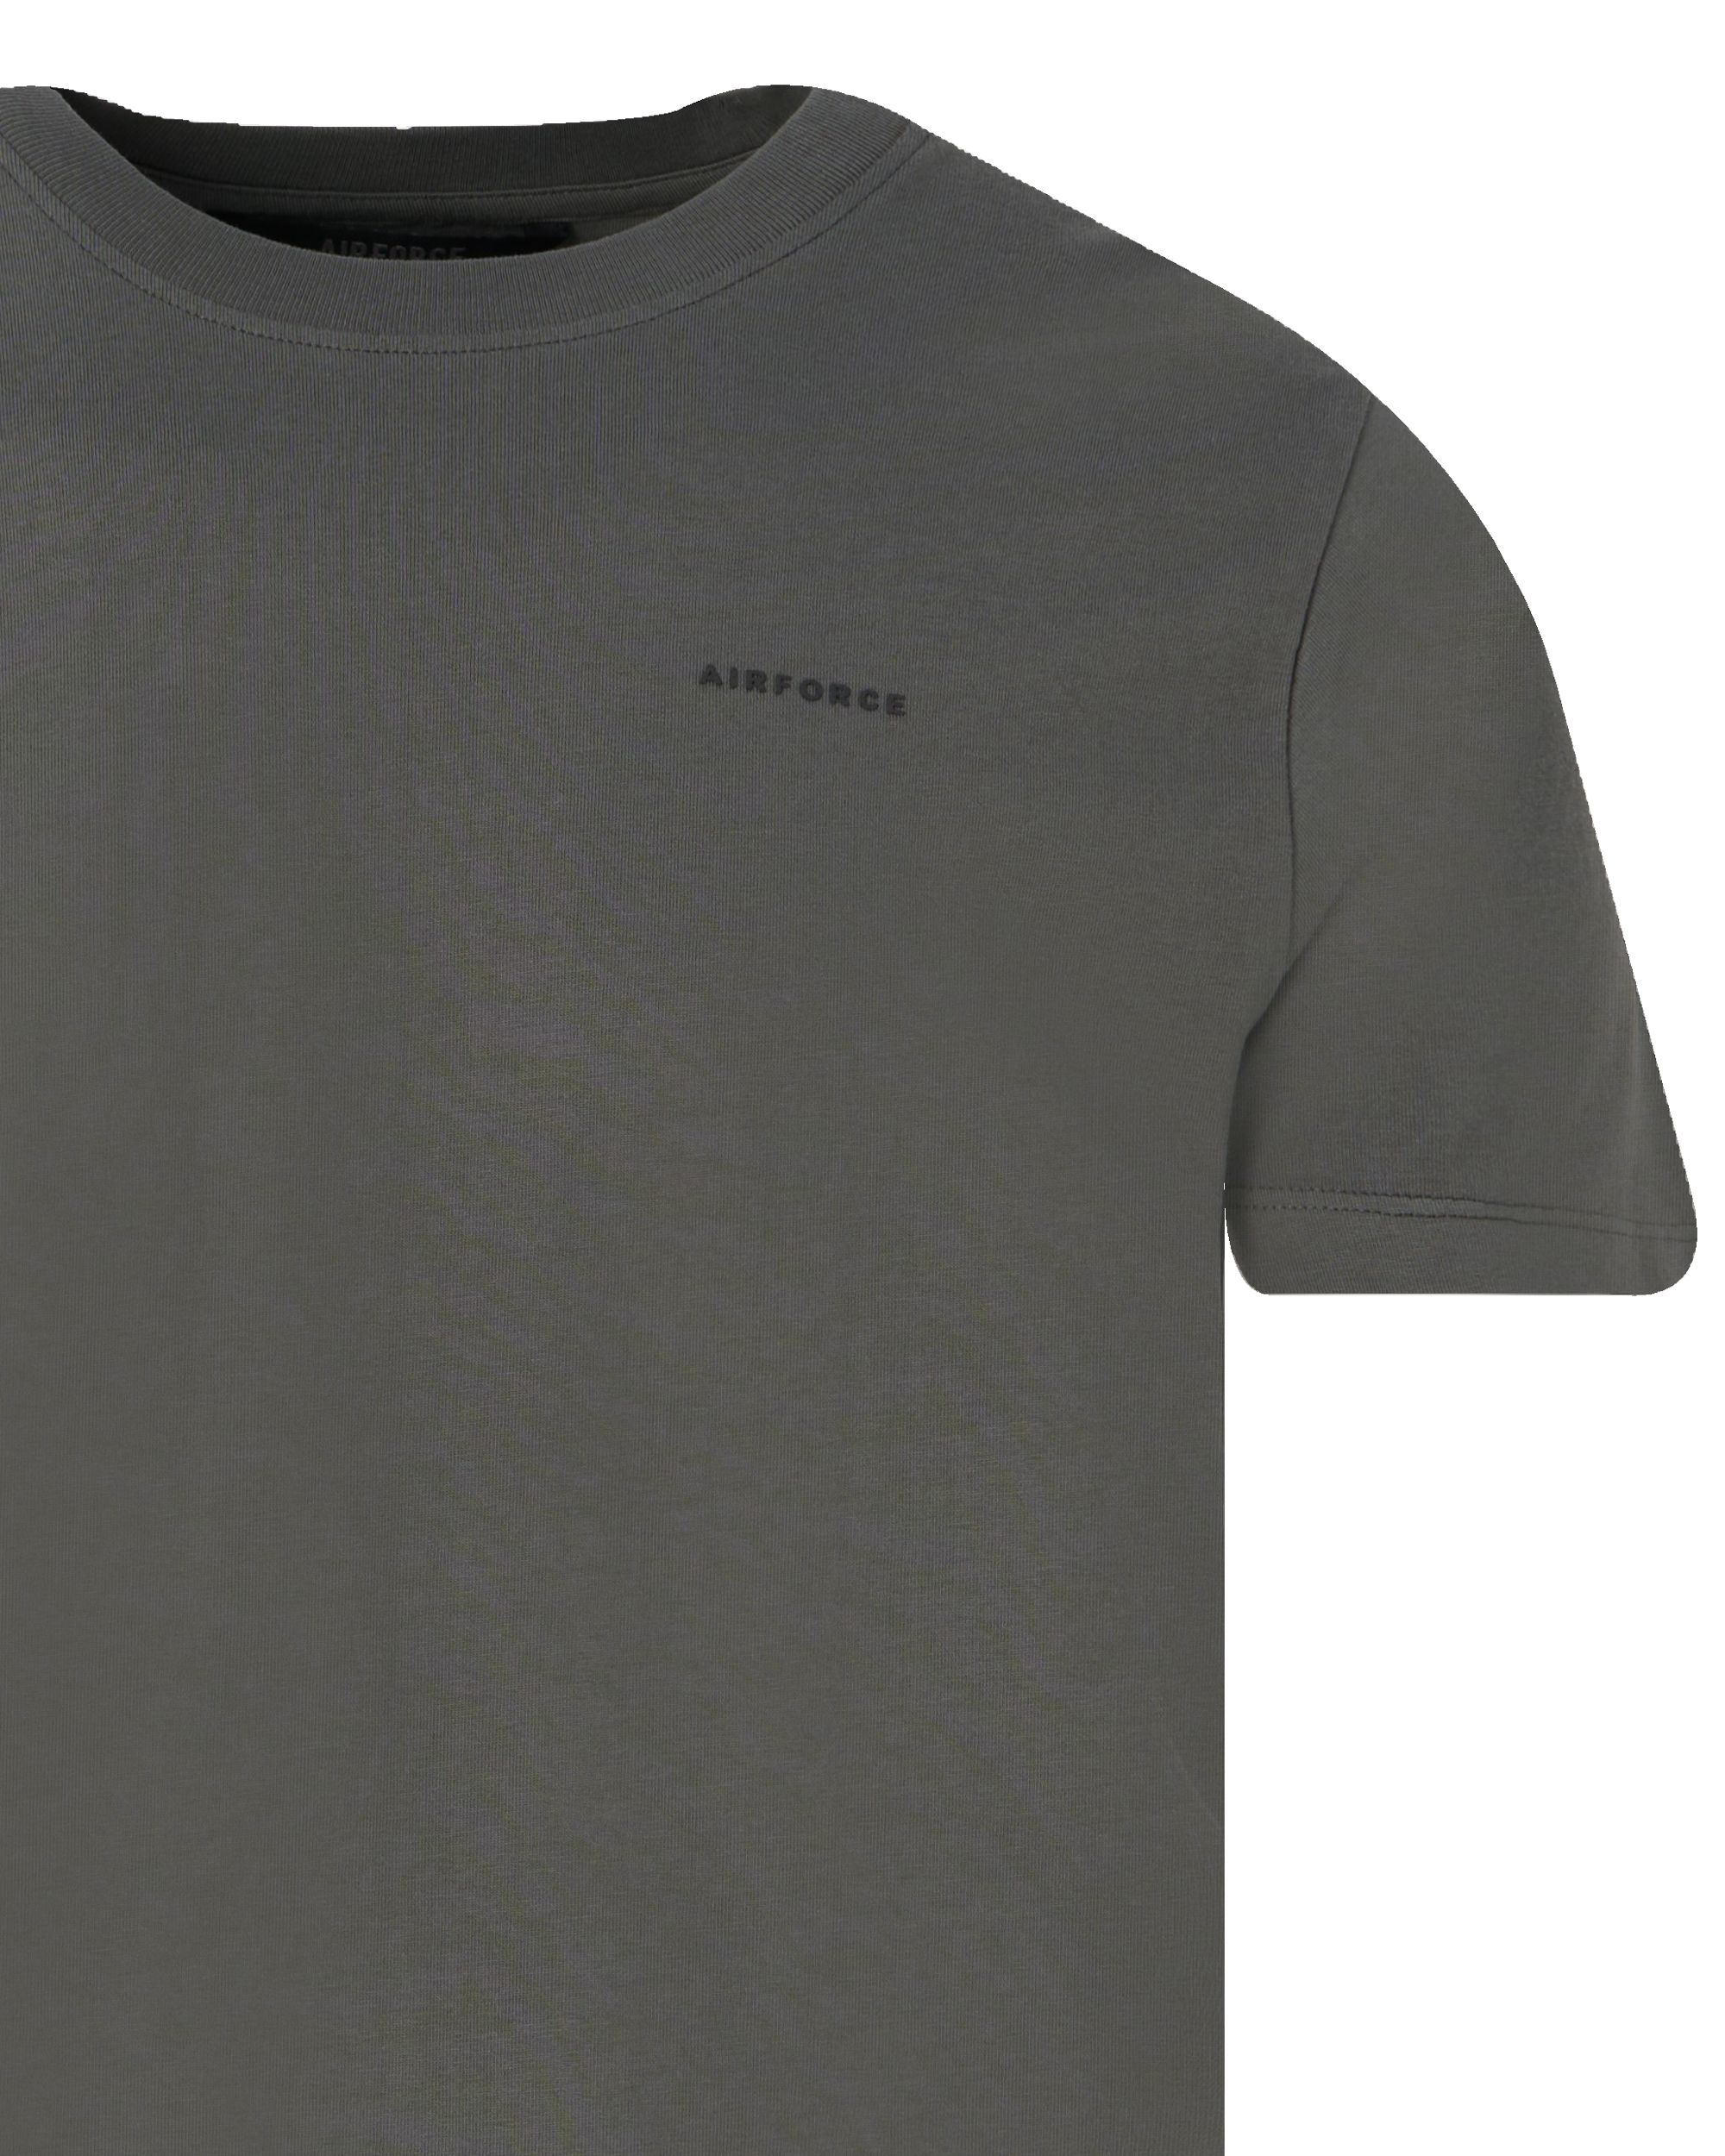 Airforce T-shirt KM Grijs 092917-001-L